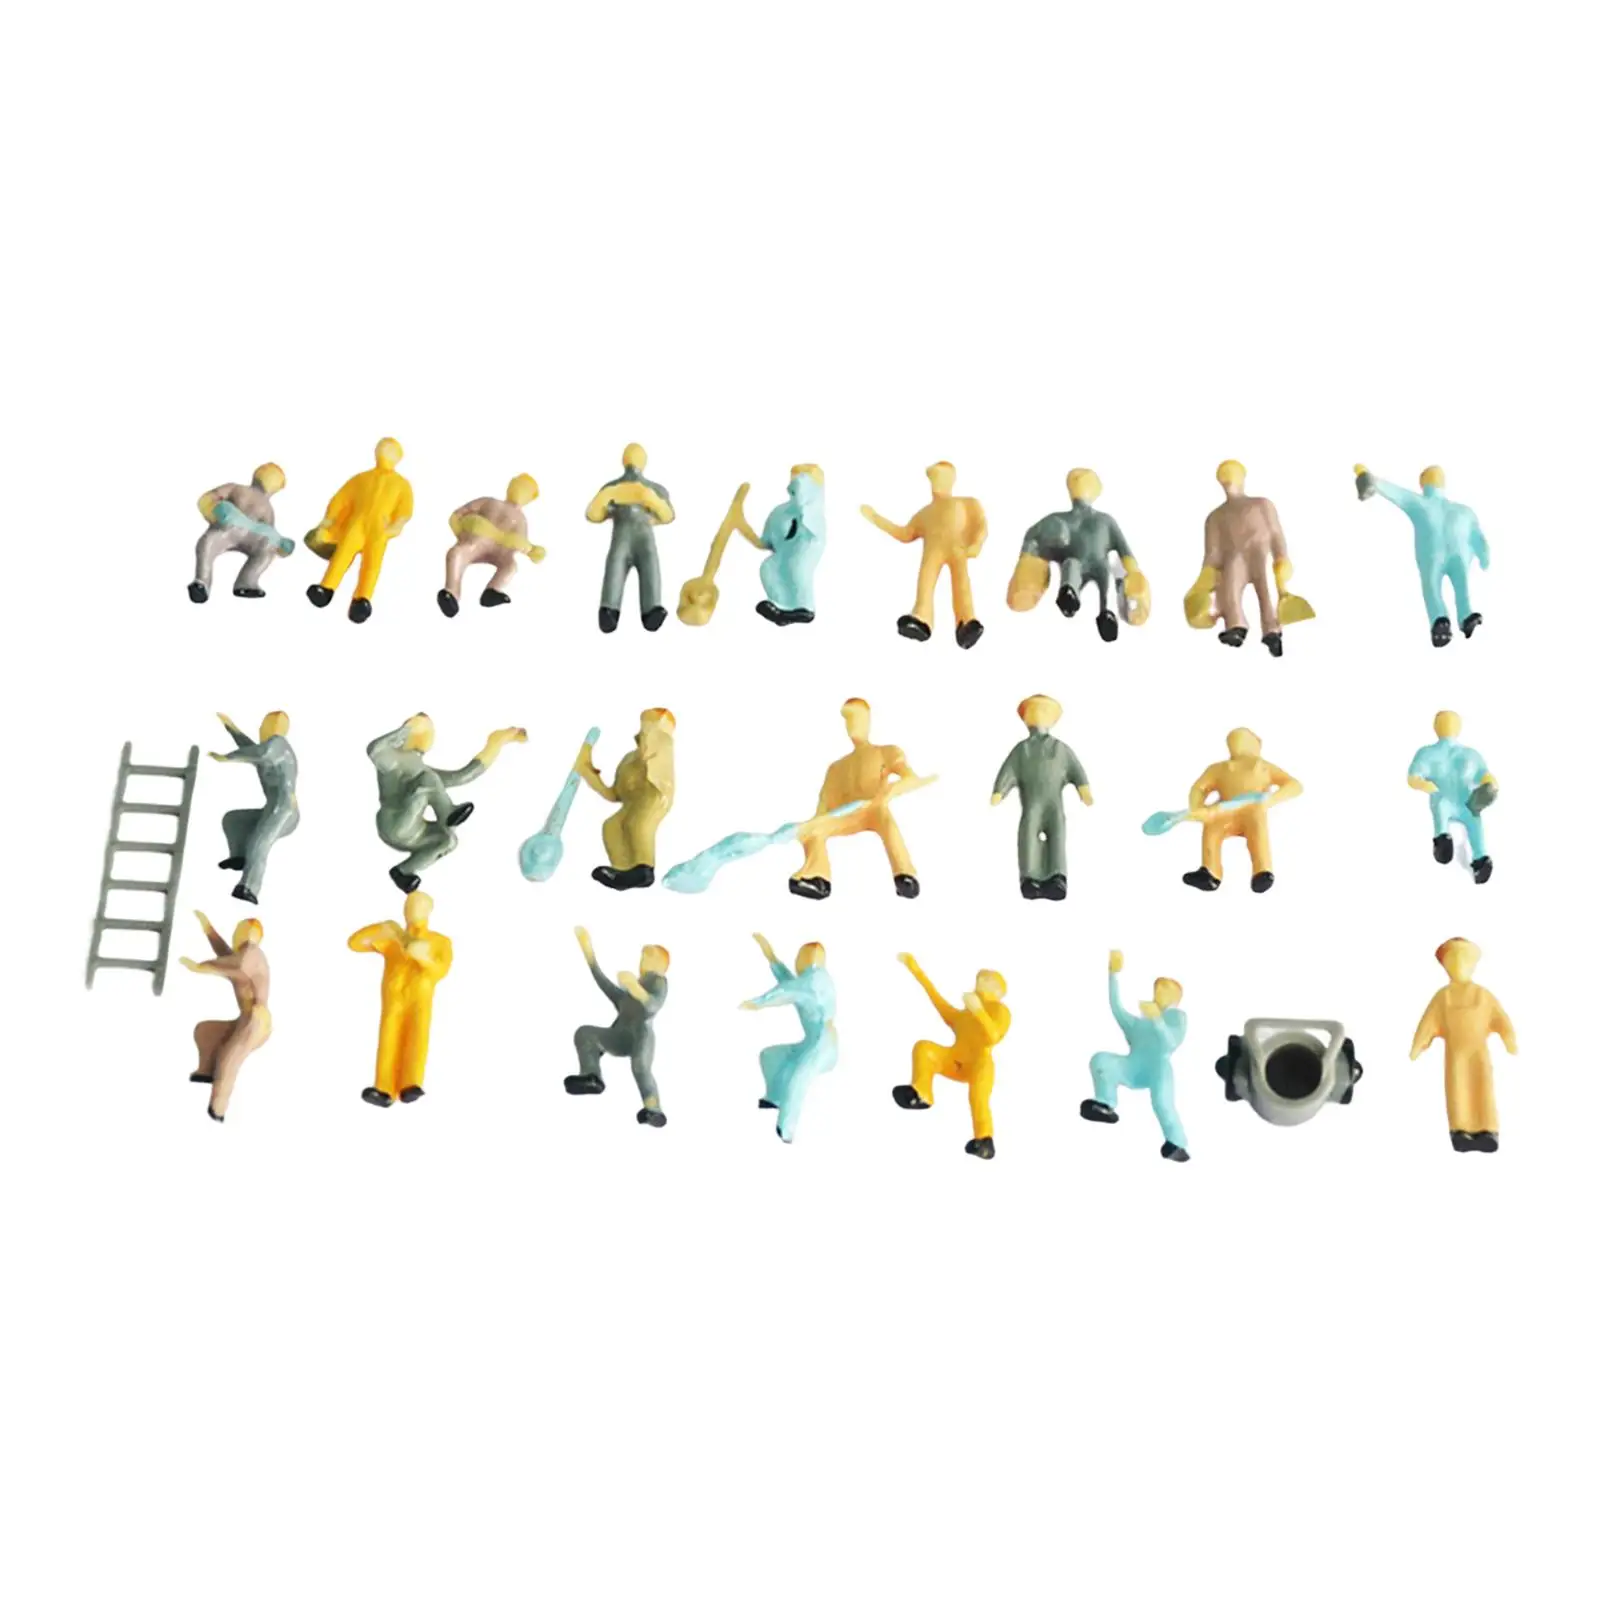 25x 1/87 Miniature Model Railroad Worker Figures with Tools Scenes Desktop Ornament Diorama HO Gauge Miniature Scenes Supplies